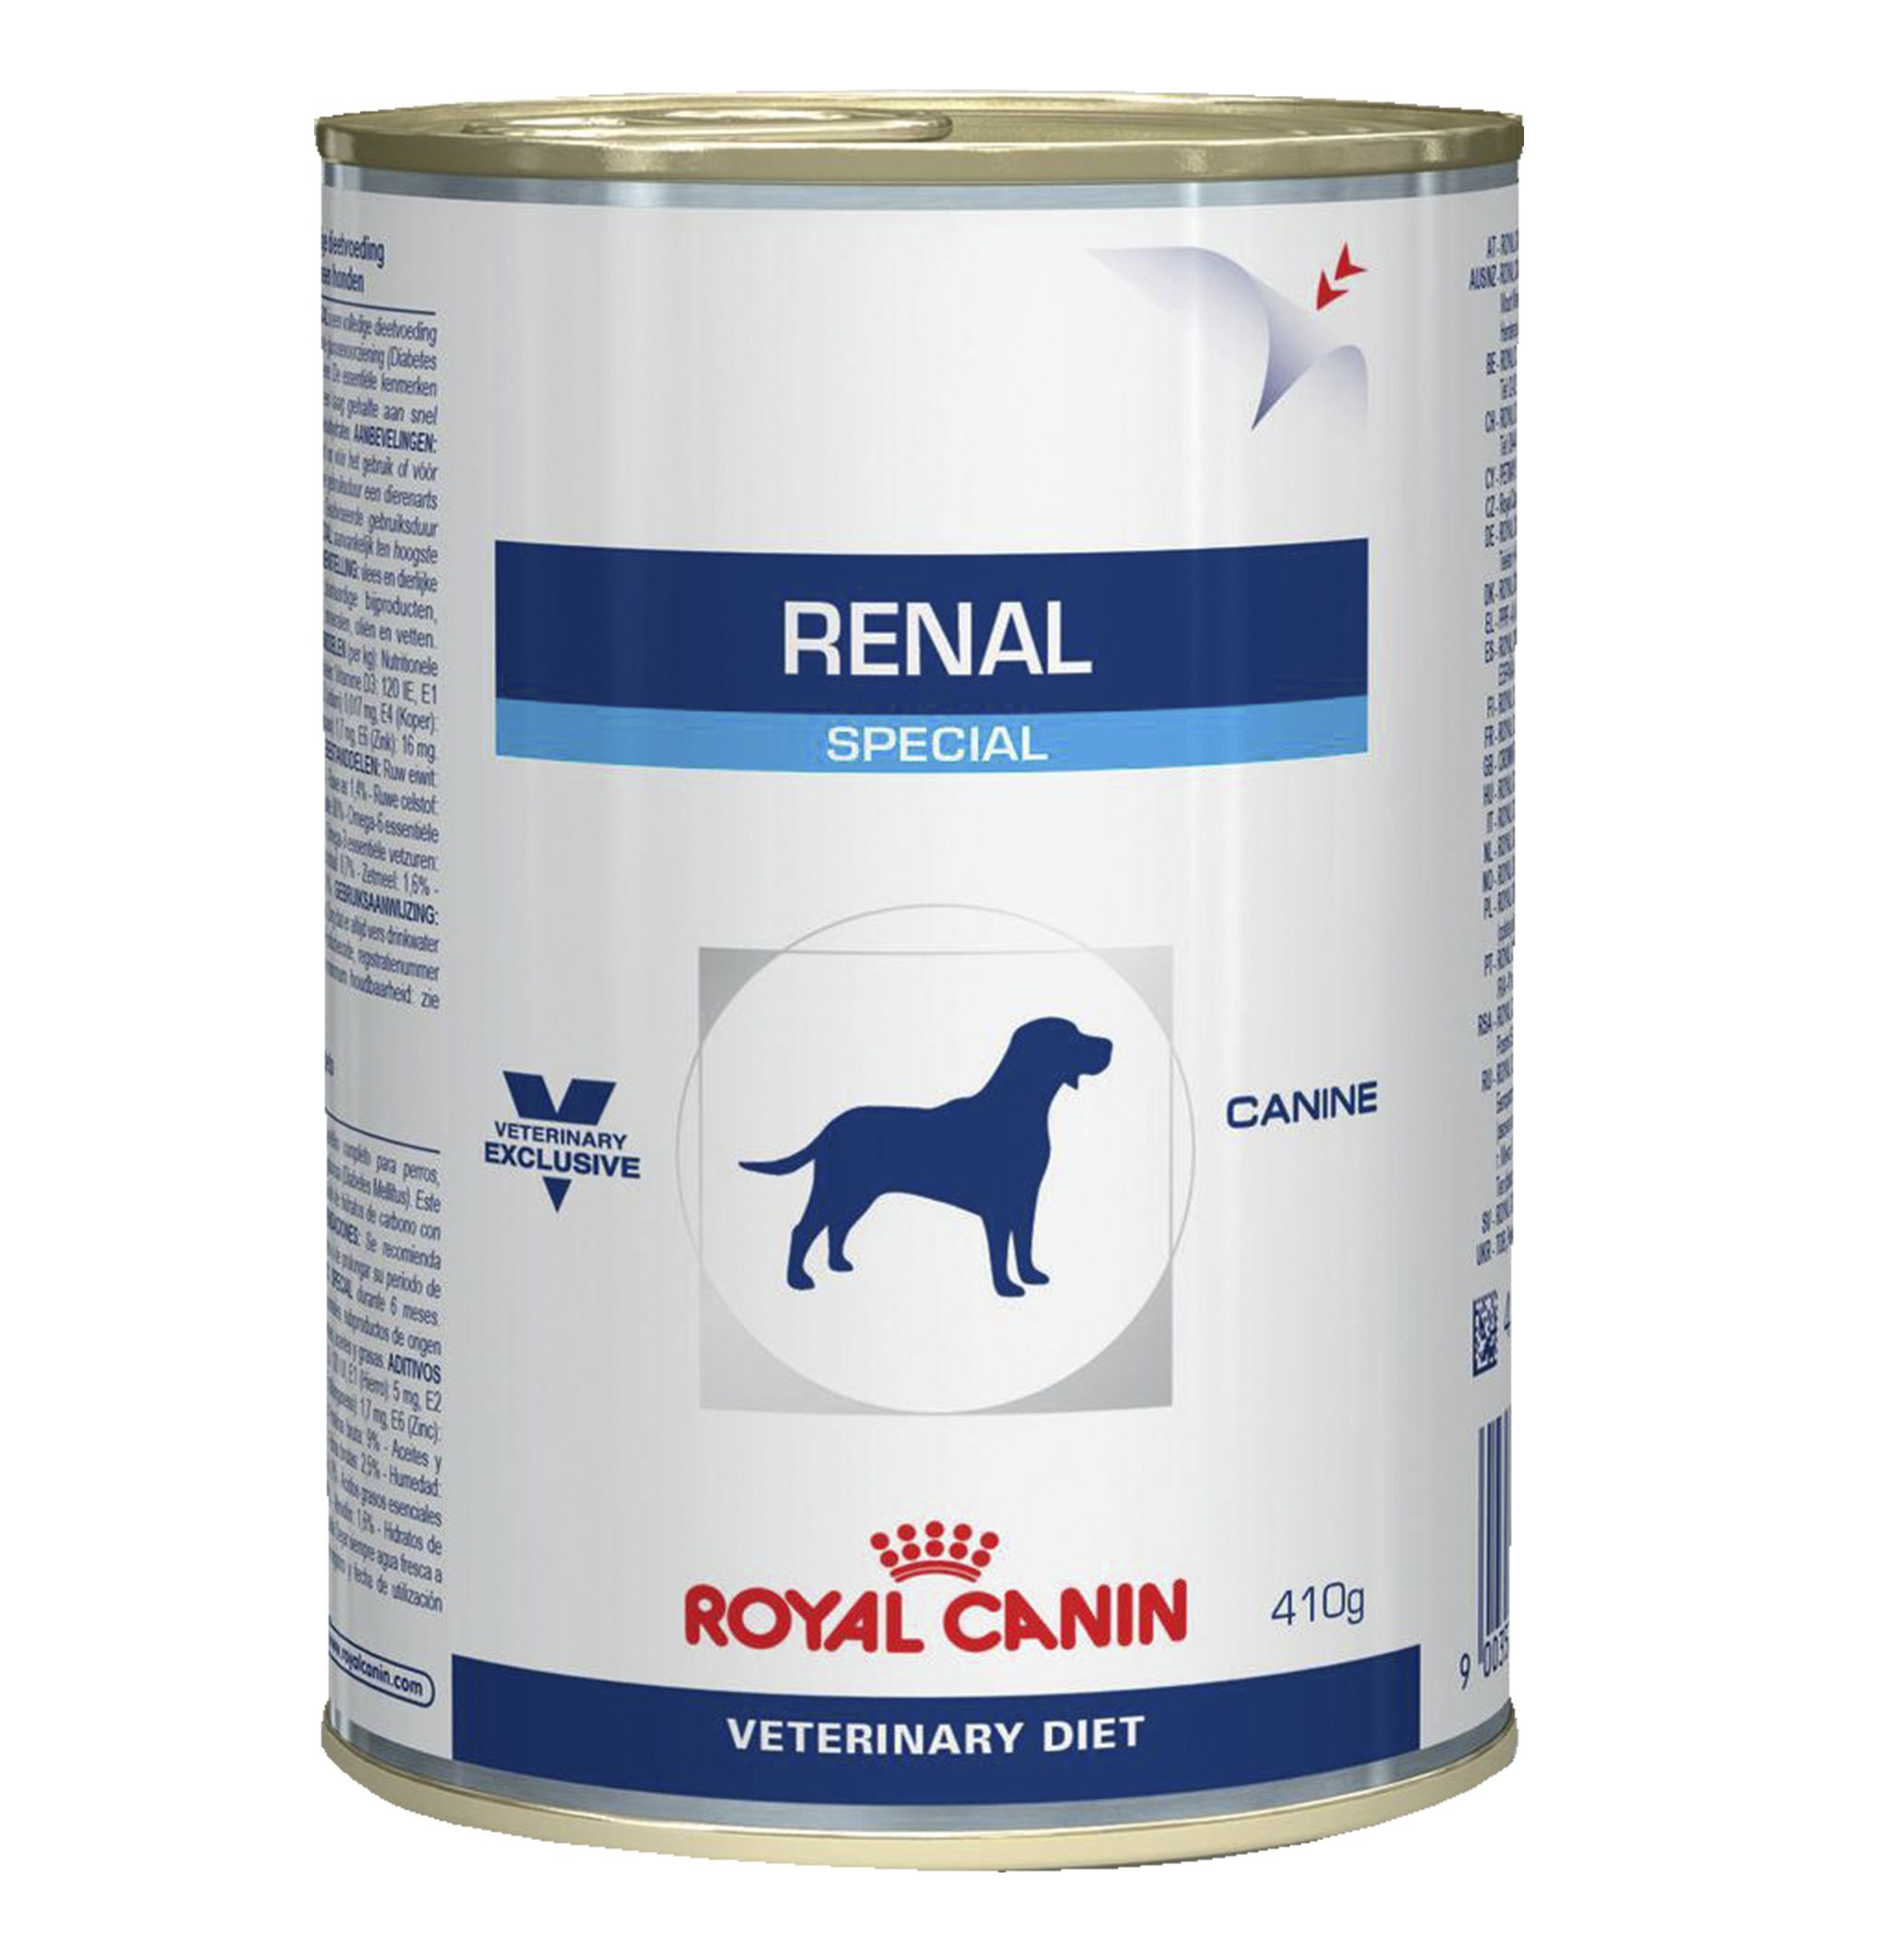 Royal Canin Renal Special консервы для собак 410 г 2